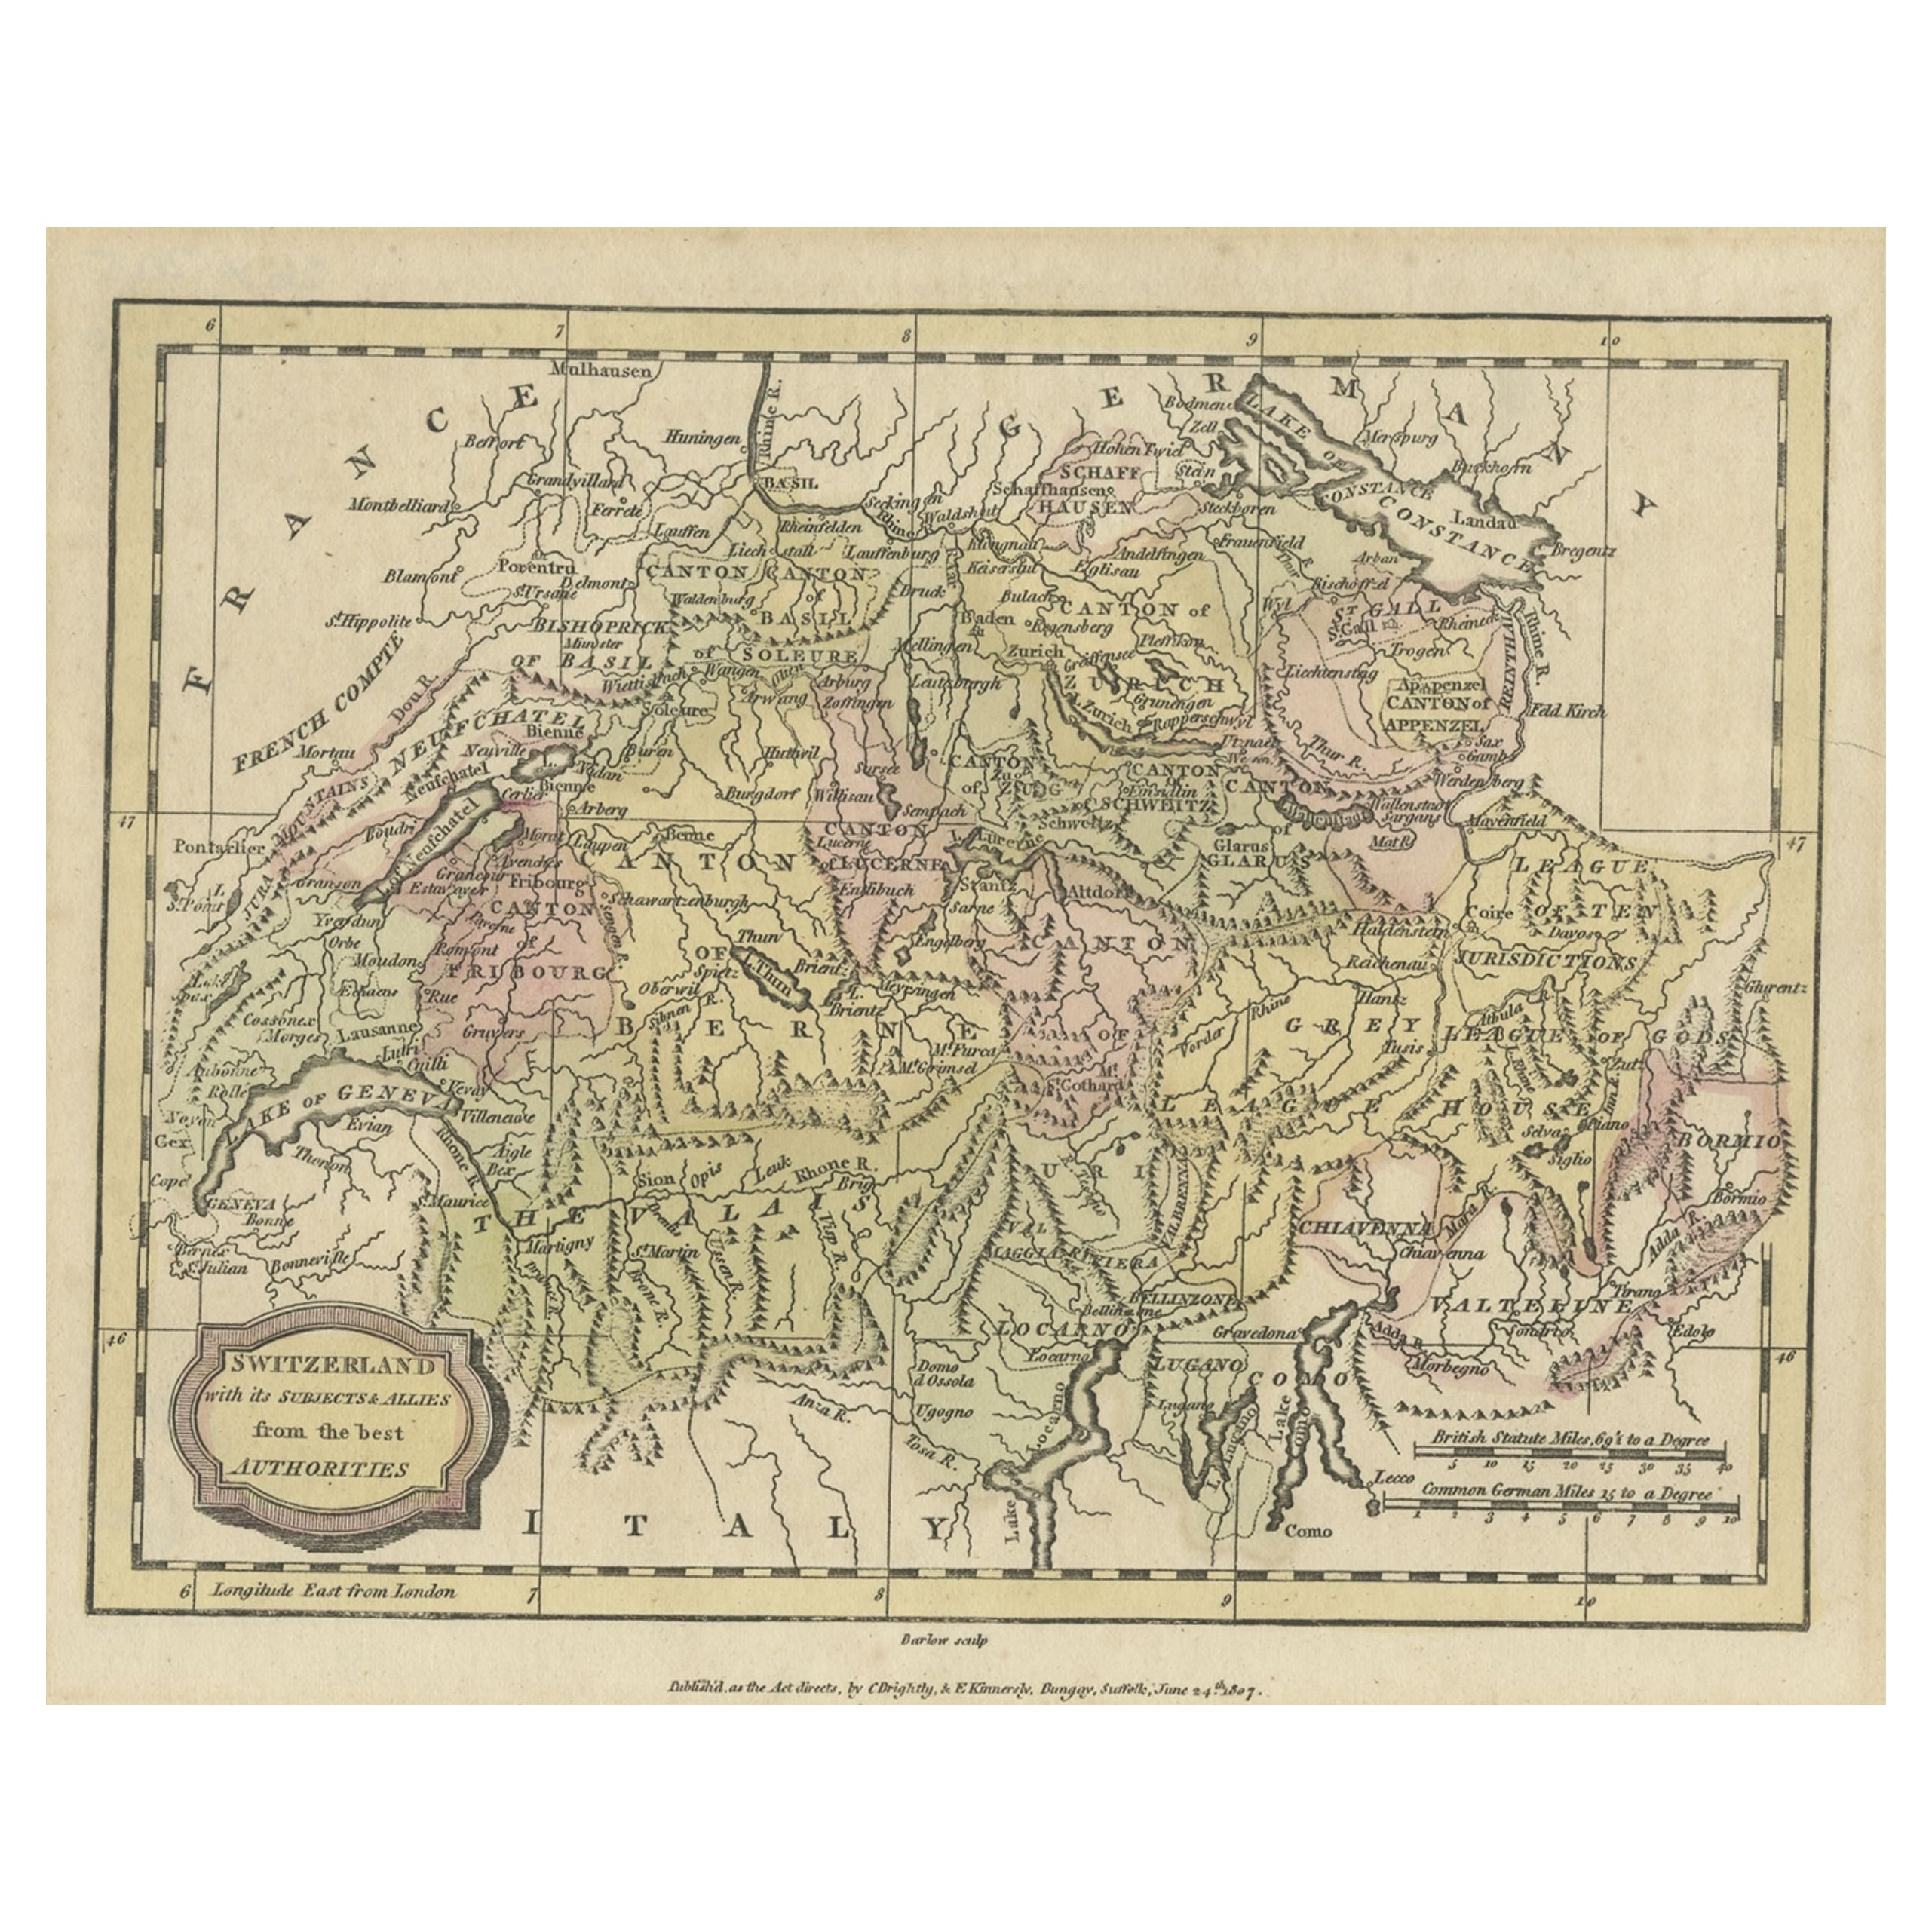 Small Original Antique Map of Switzerland and Surroundings, 1807